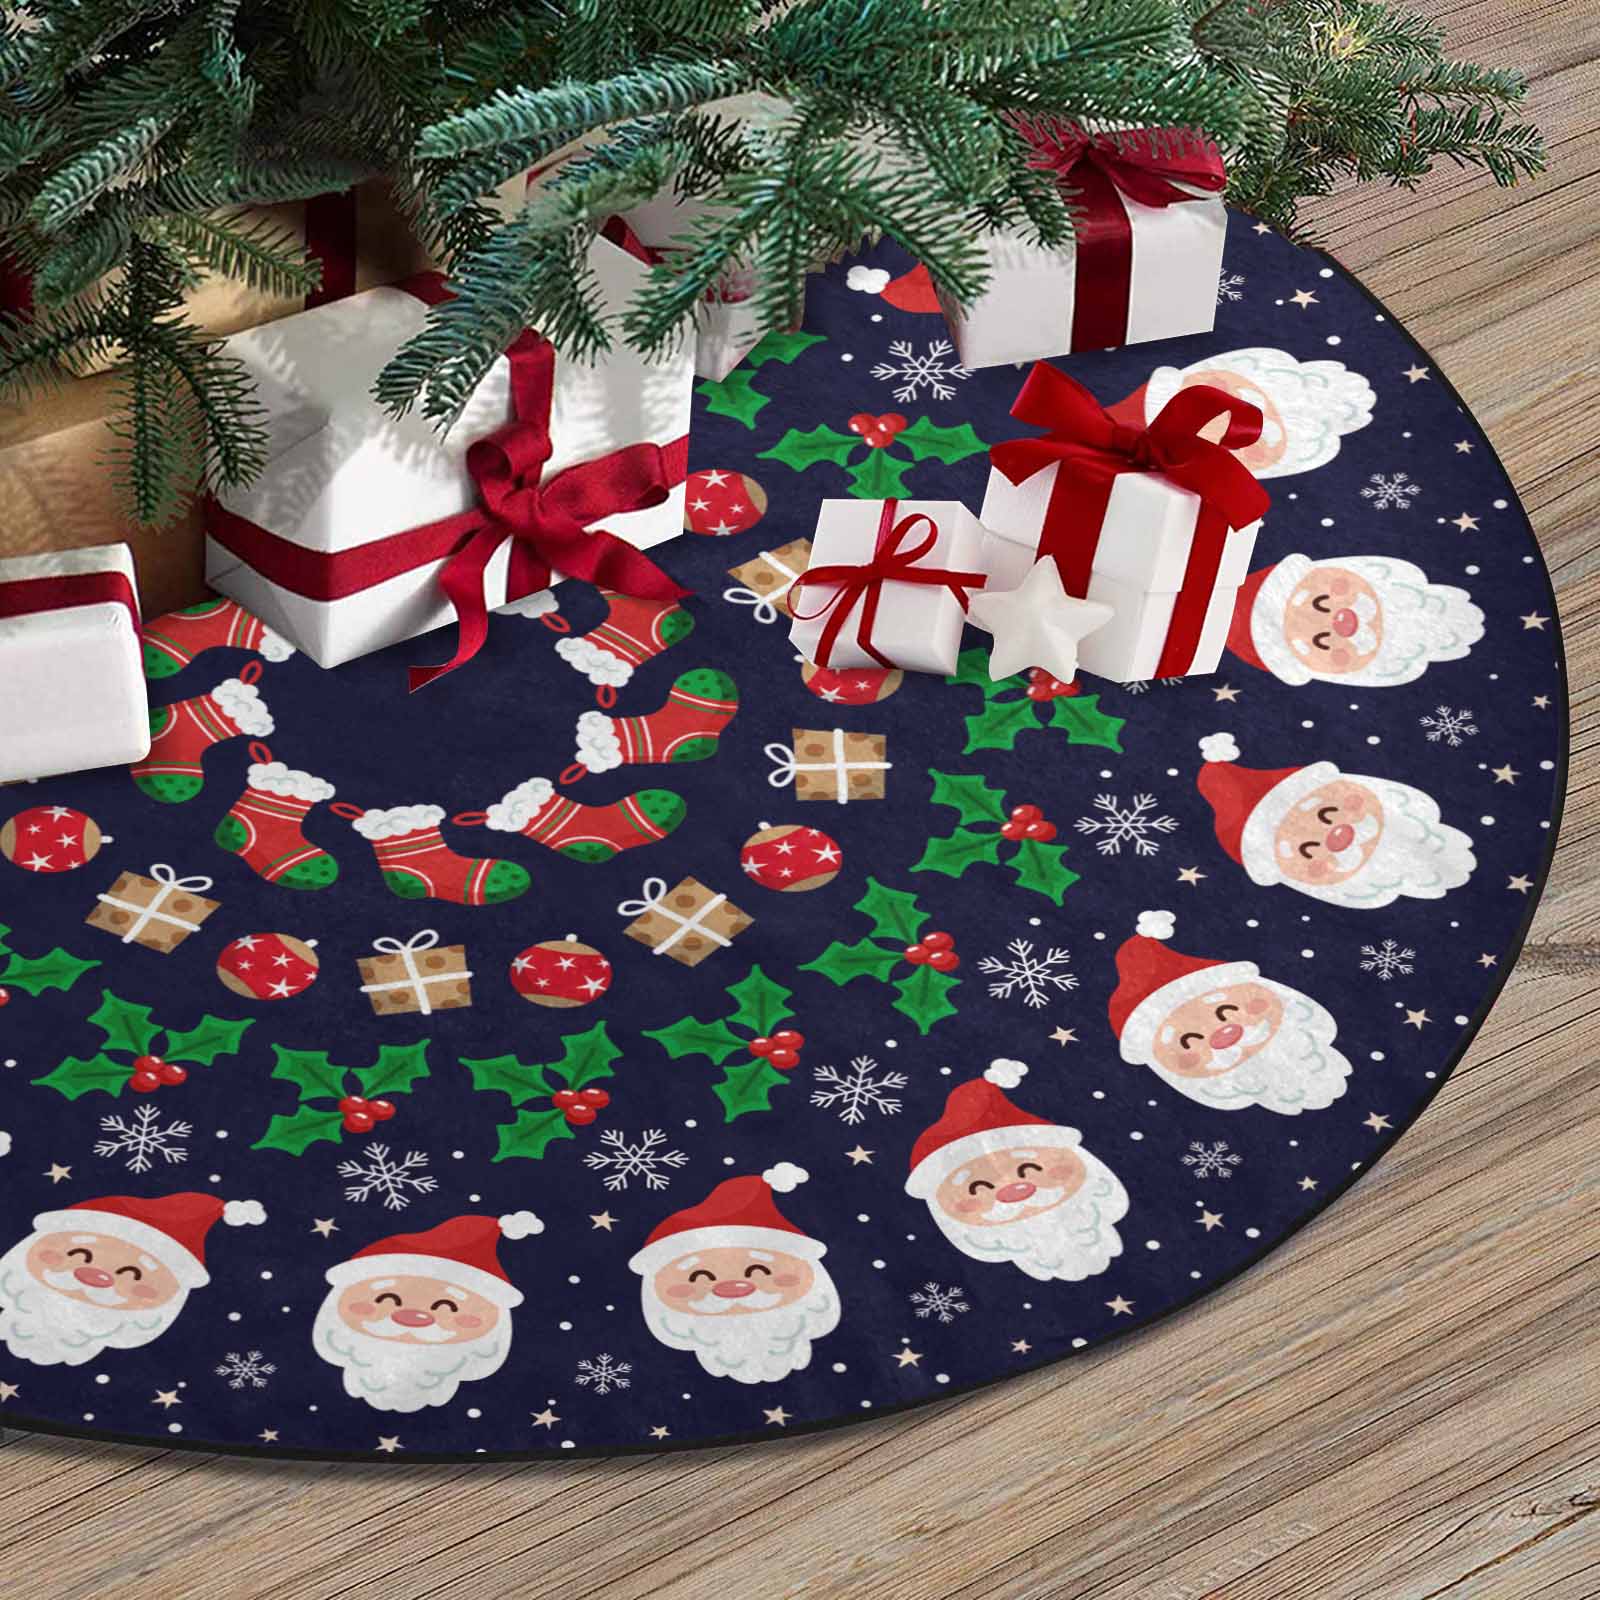 Christmas Tree Skirt, Decoration For Christmas Tree, Santa Claus Face